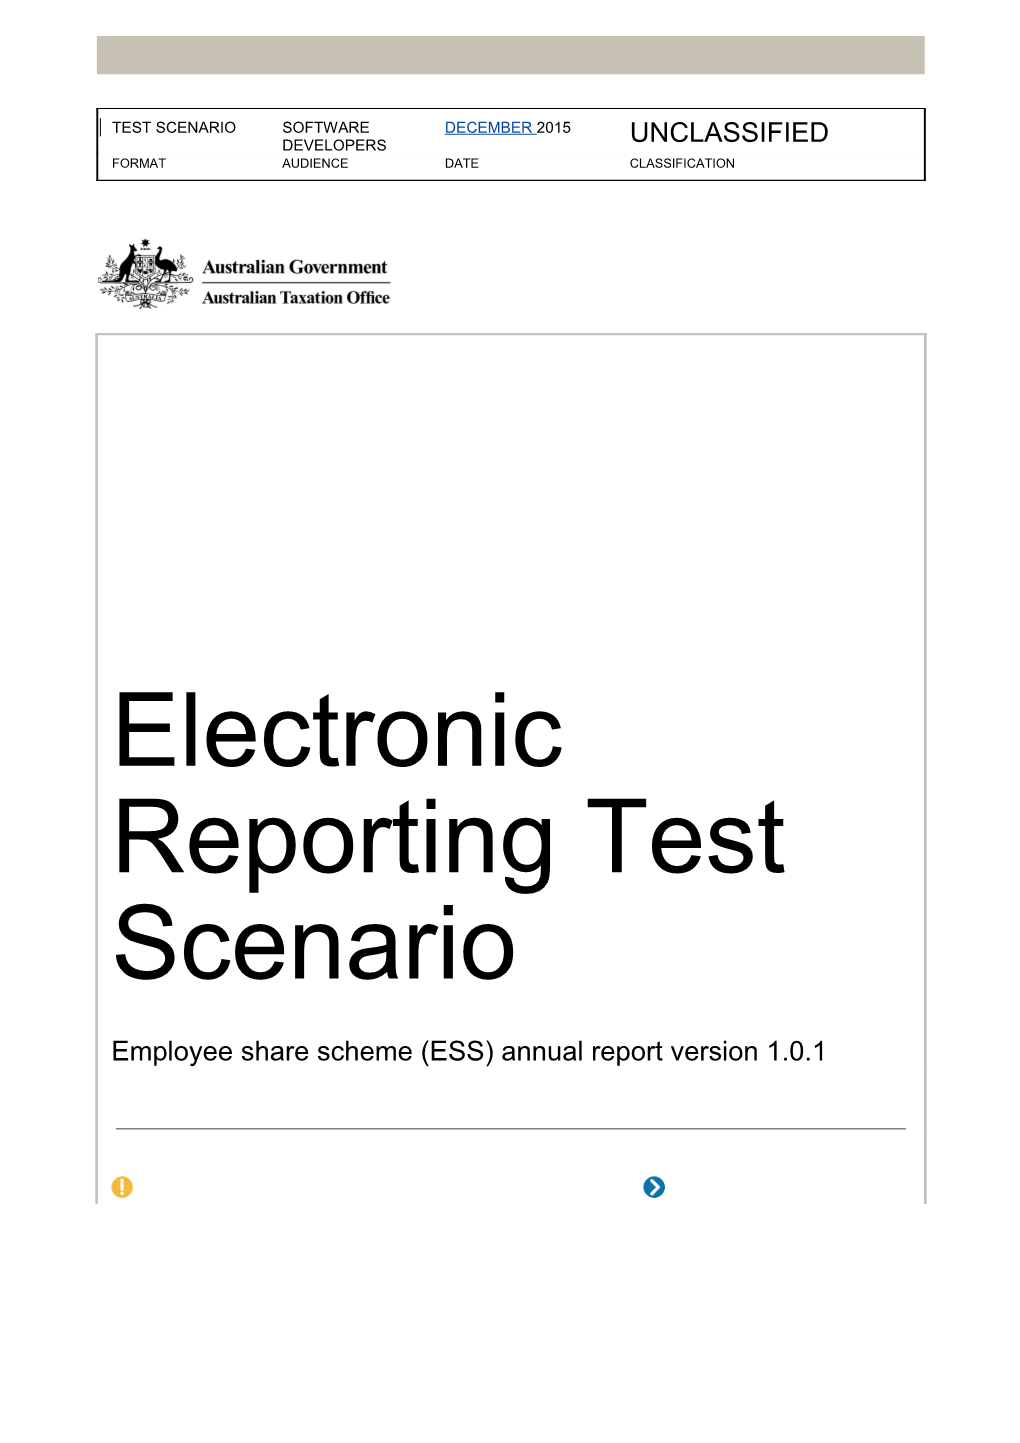 Employee Share Scheme (Ess) Annual Report V1.0.2 Test Scenario